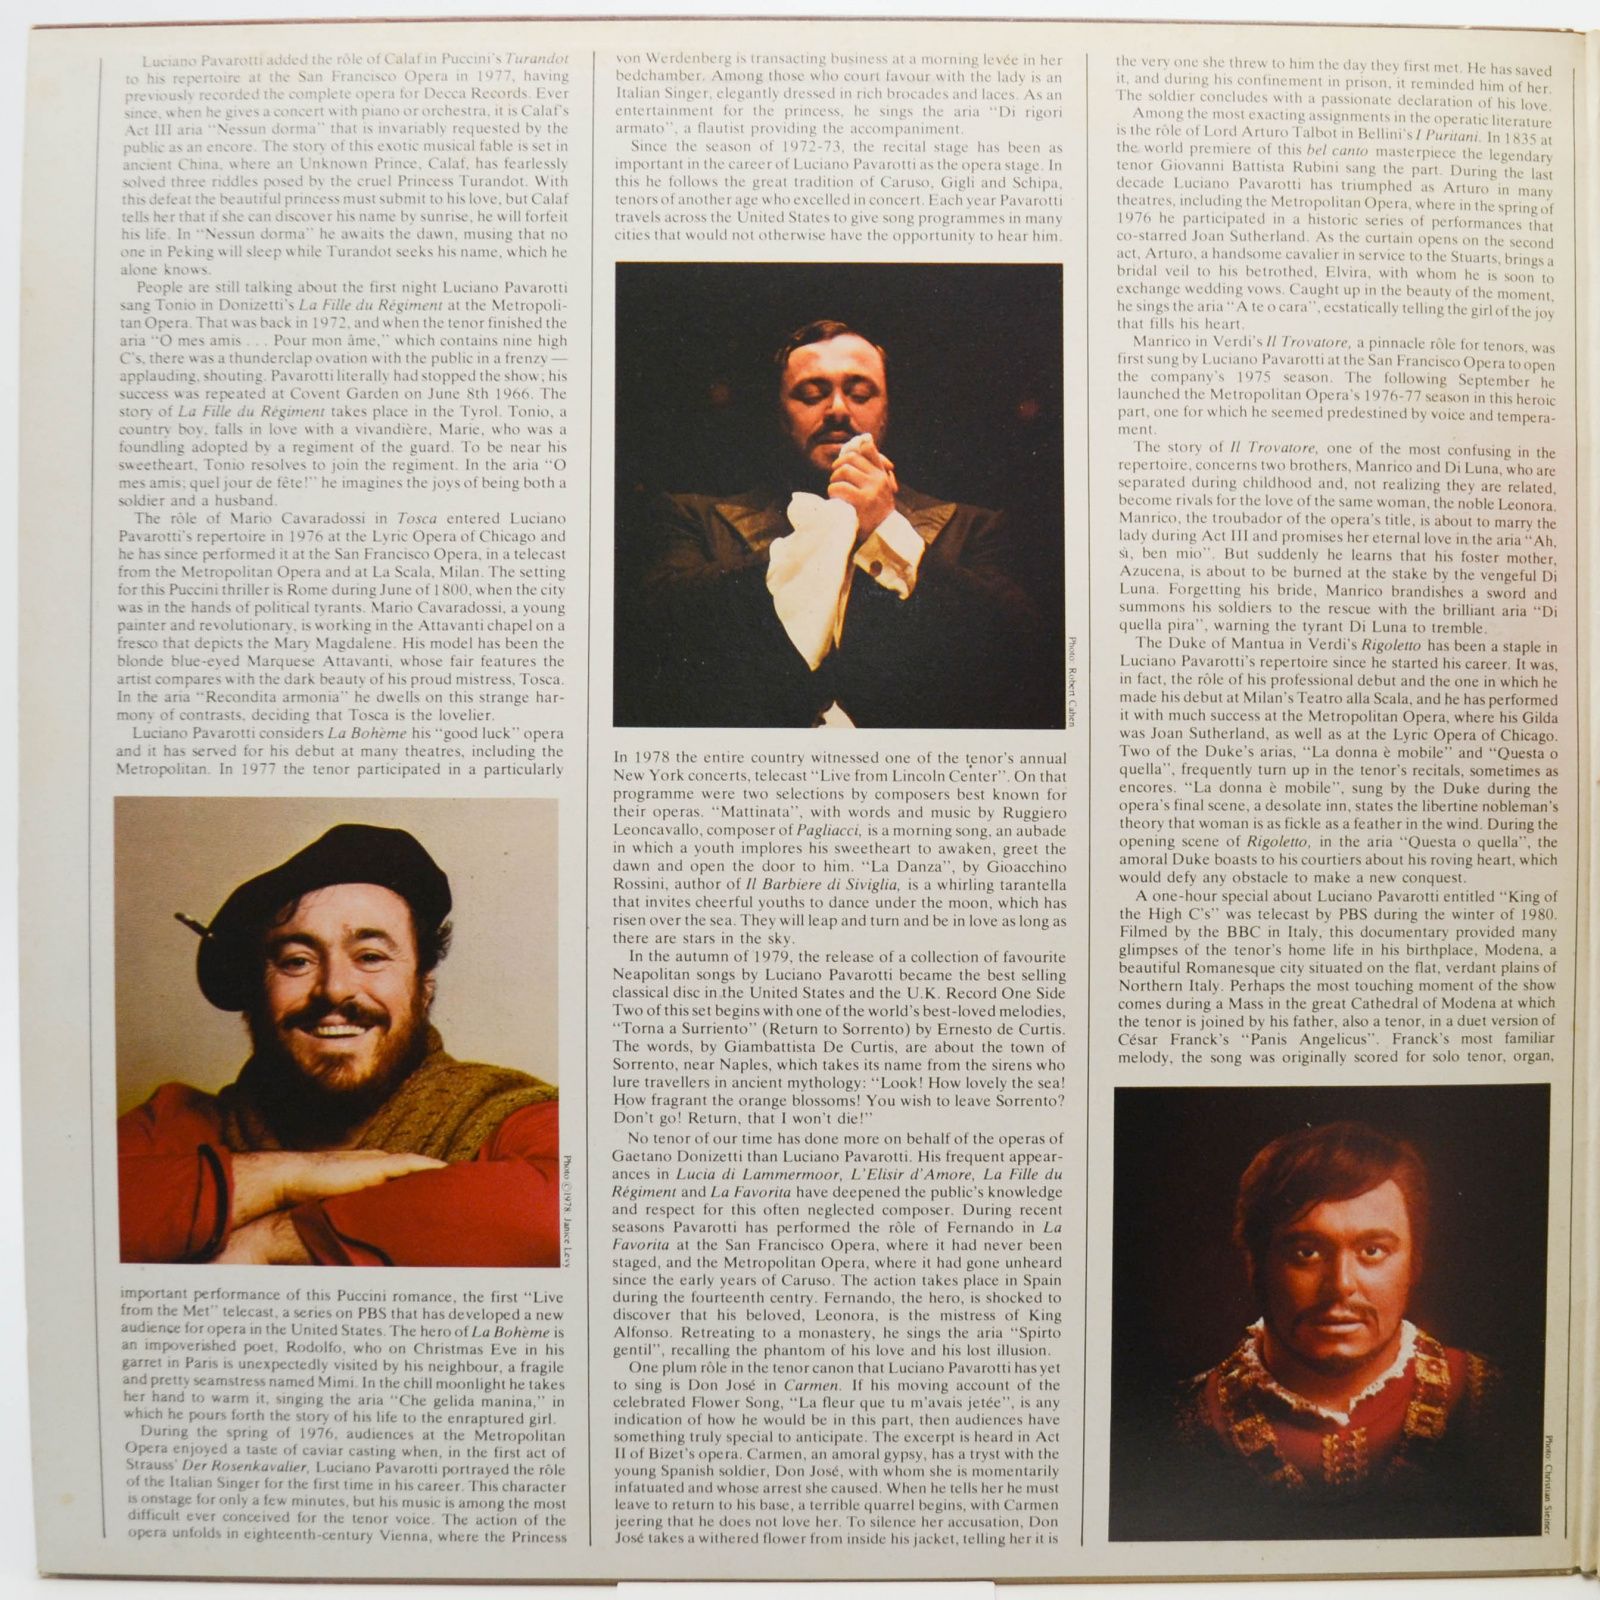 Luciano Pavarotti — Pavarotti's Greatest Hits (2LP, UK), 1980